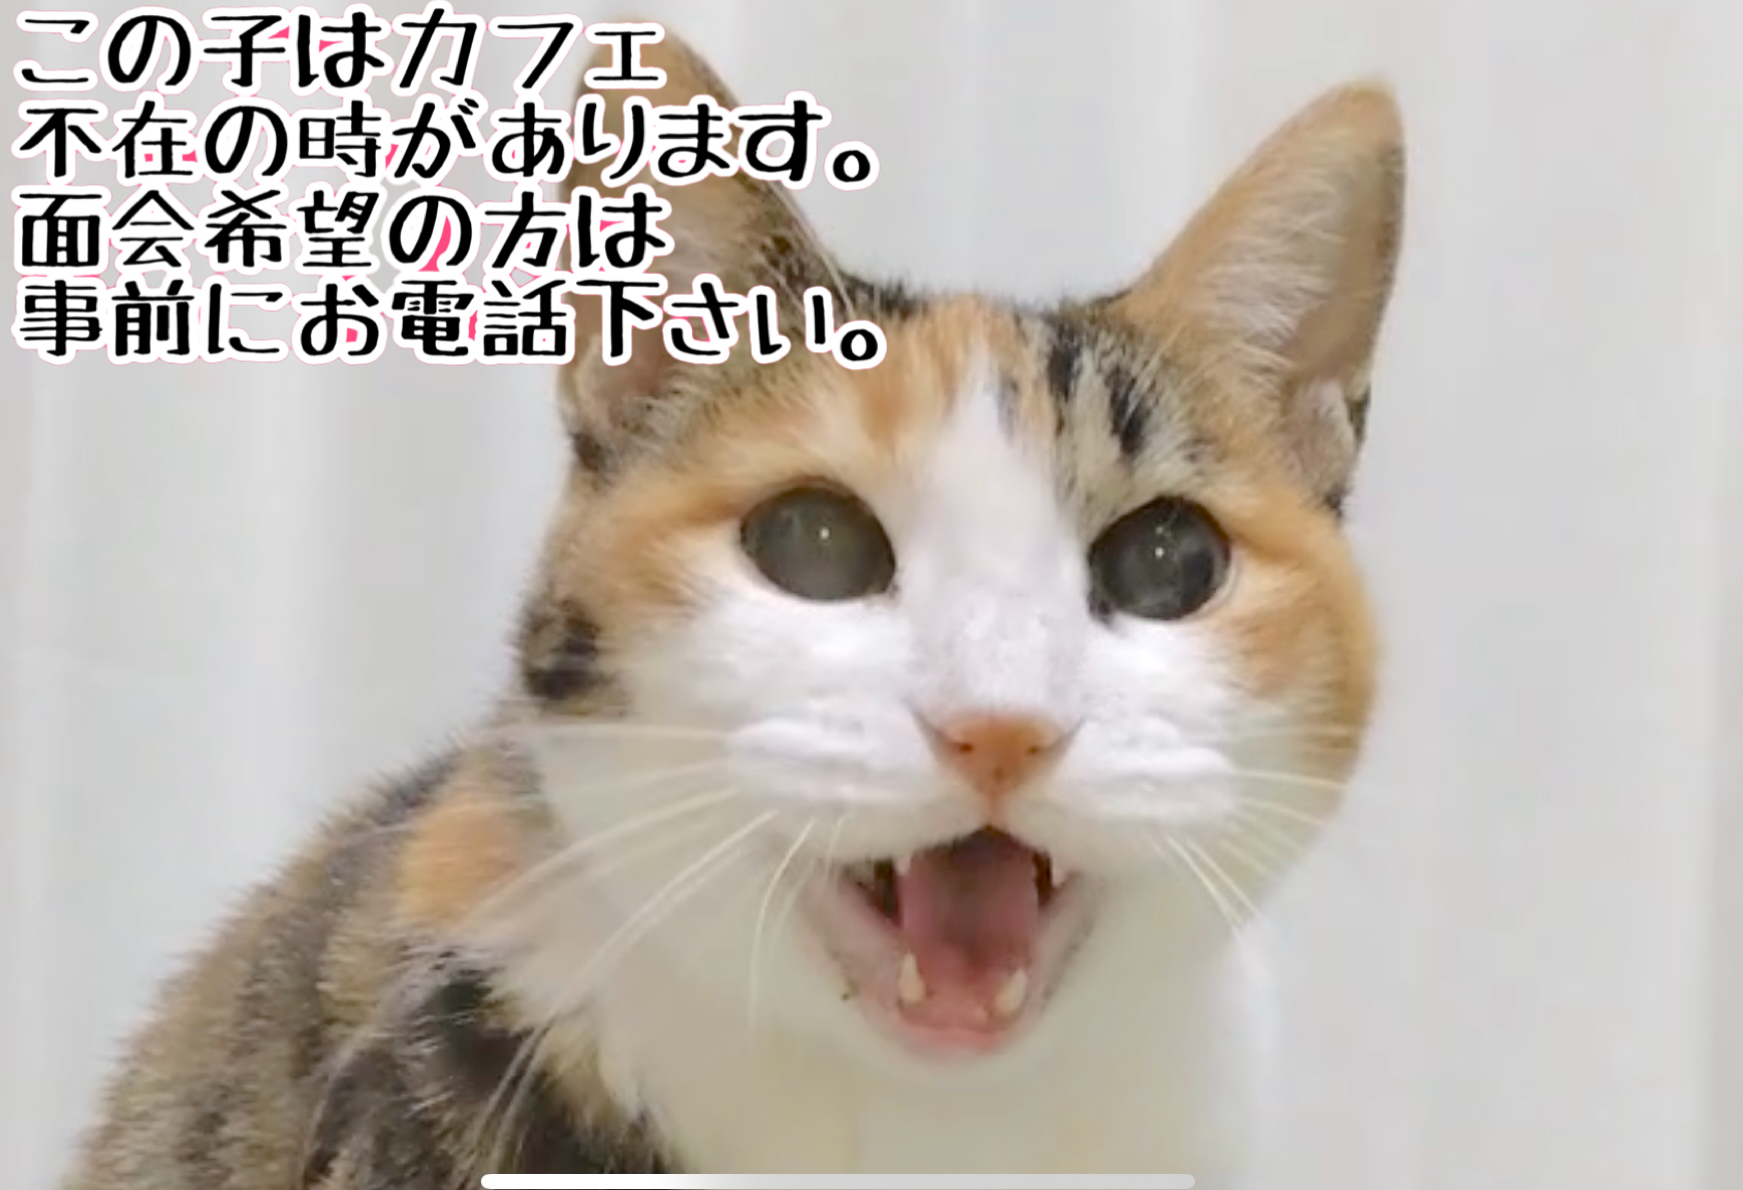 <ul>
<li>猫種：日本猫</li>
<li>名前（性別）：サクラ(女の子)</li>
<li>年齢：2008年頃生まれ</li>
<li>保護経緯：飼い主が高齢になり逝去され飼育困難</li>
</ul>
